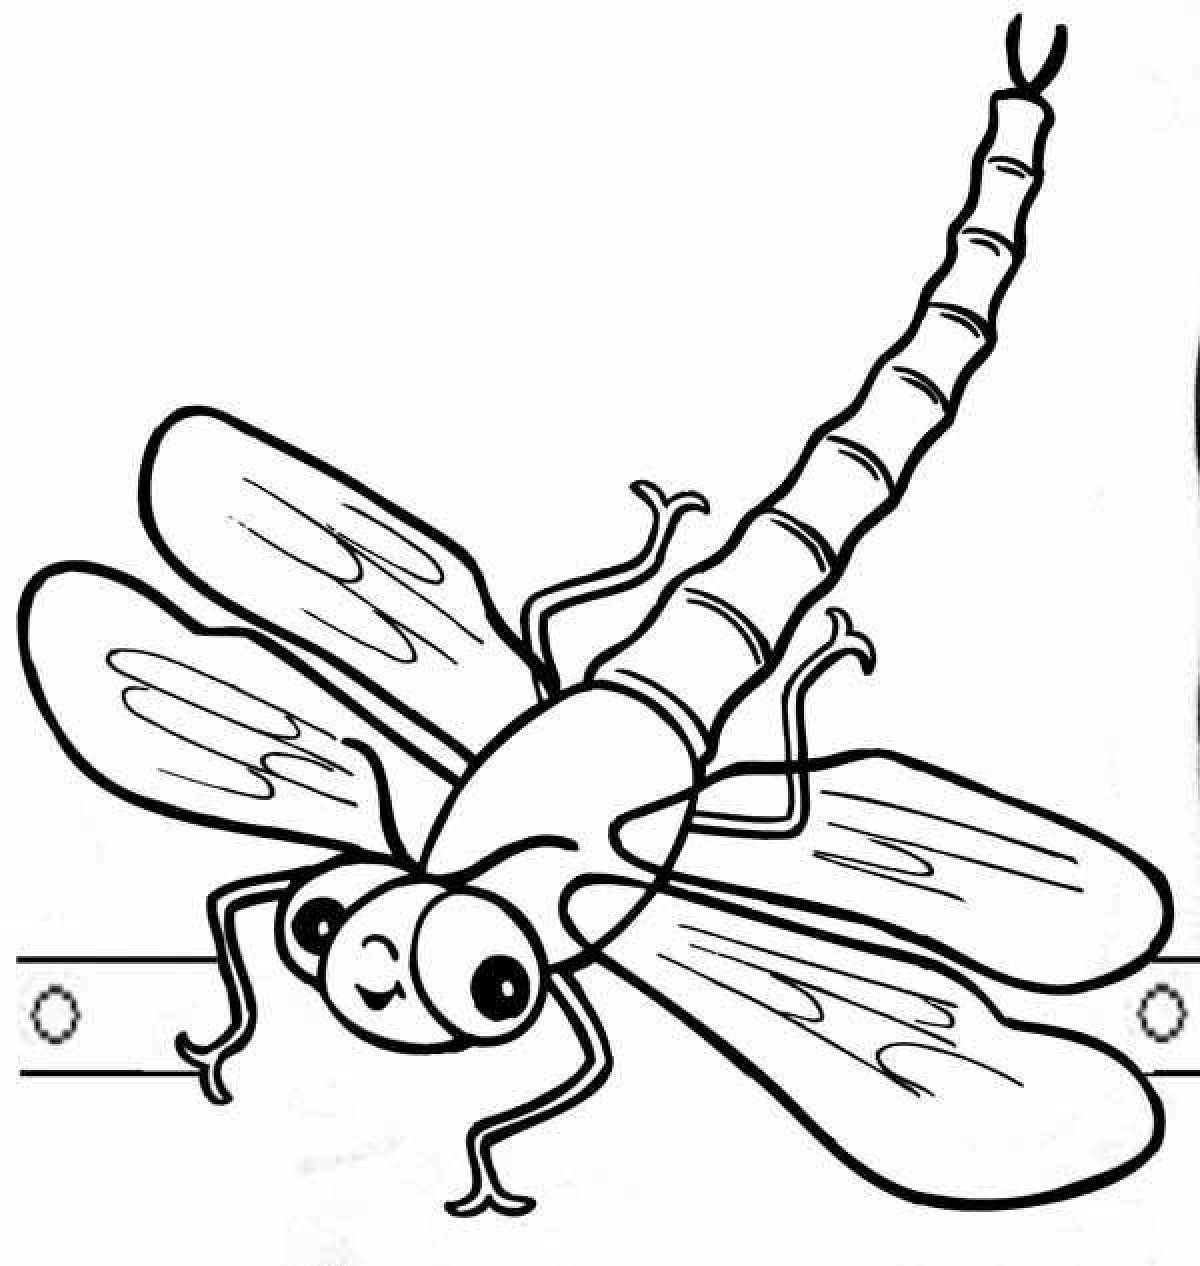 Elegant dragonfly coloring book for kids